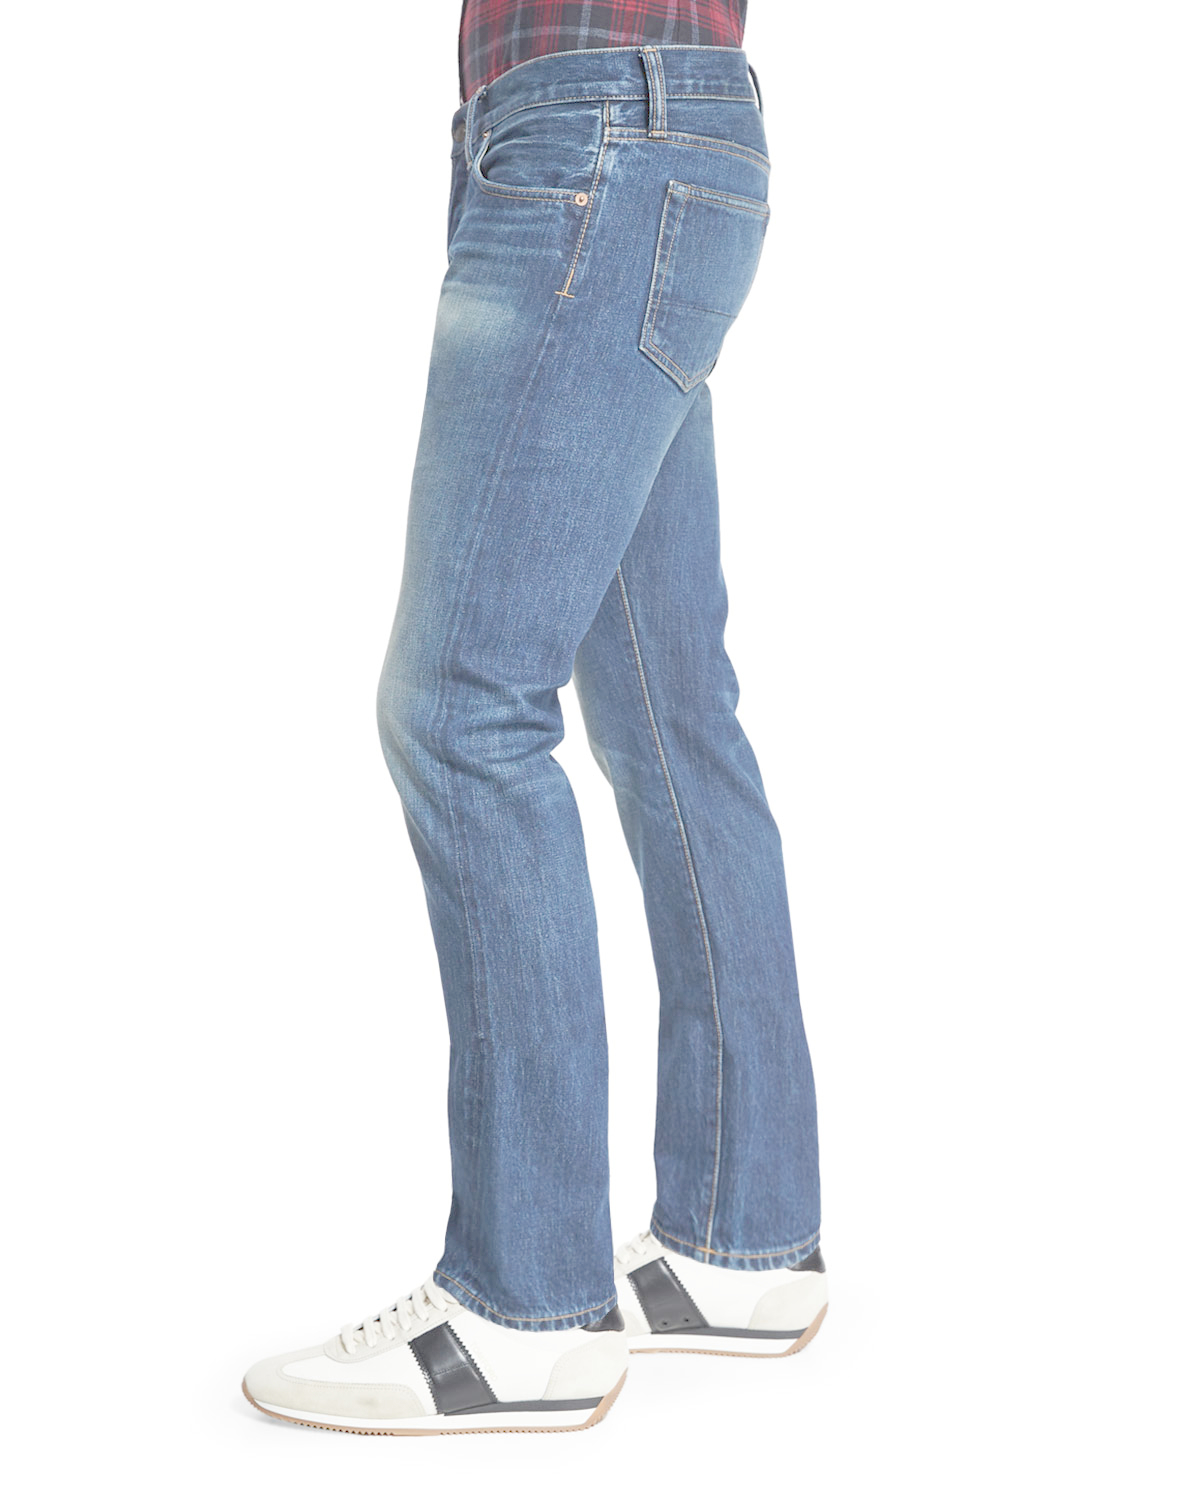 Lyst - Tom ford Straight-fit Vintage-wash Selvedge Denim Jeans in Blue ...